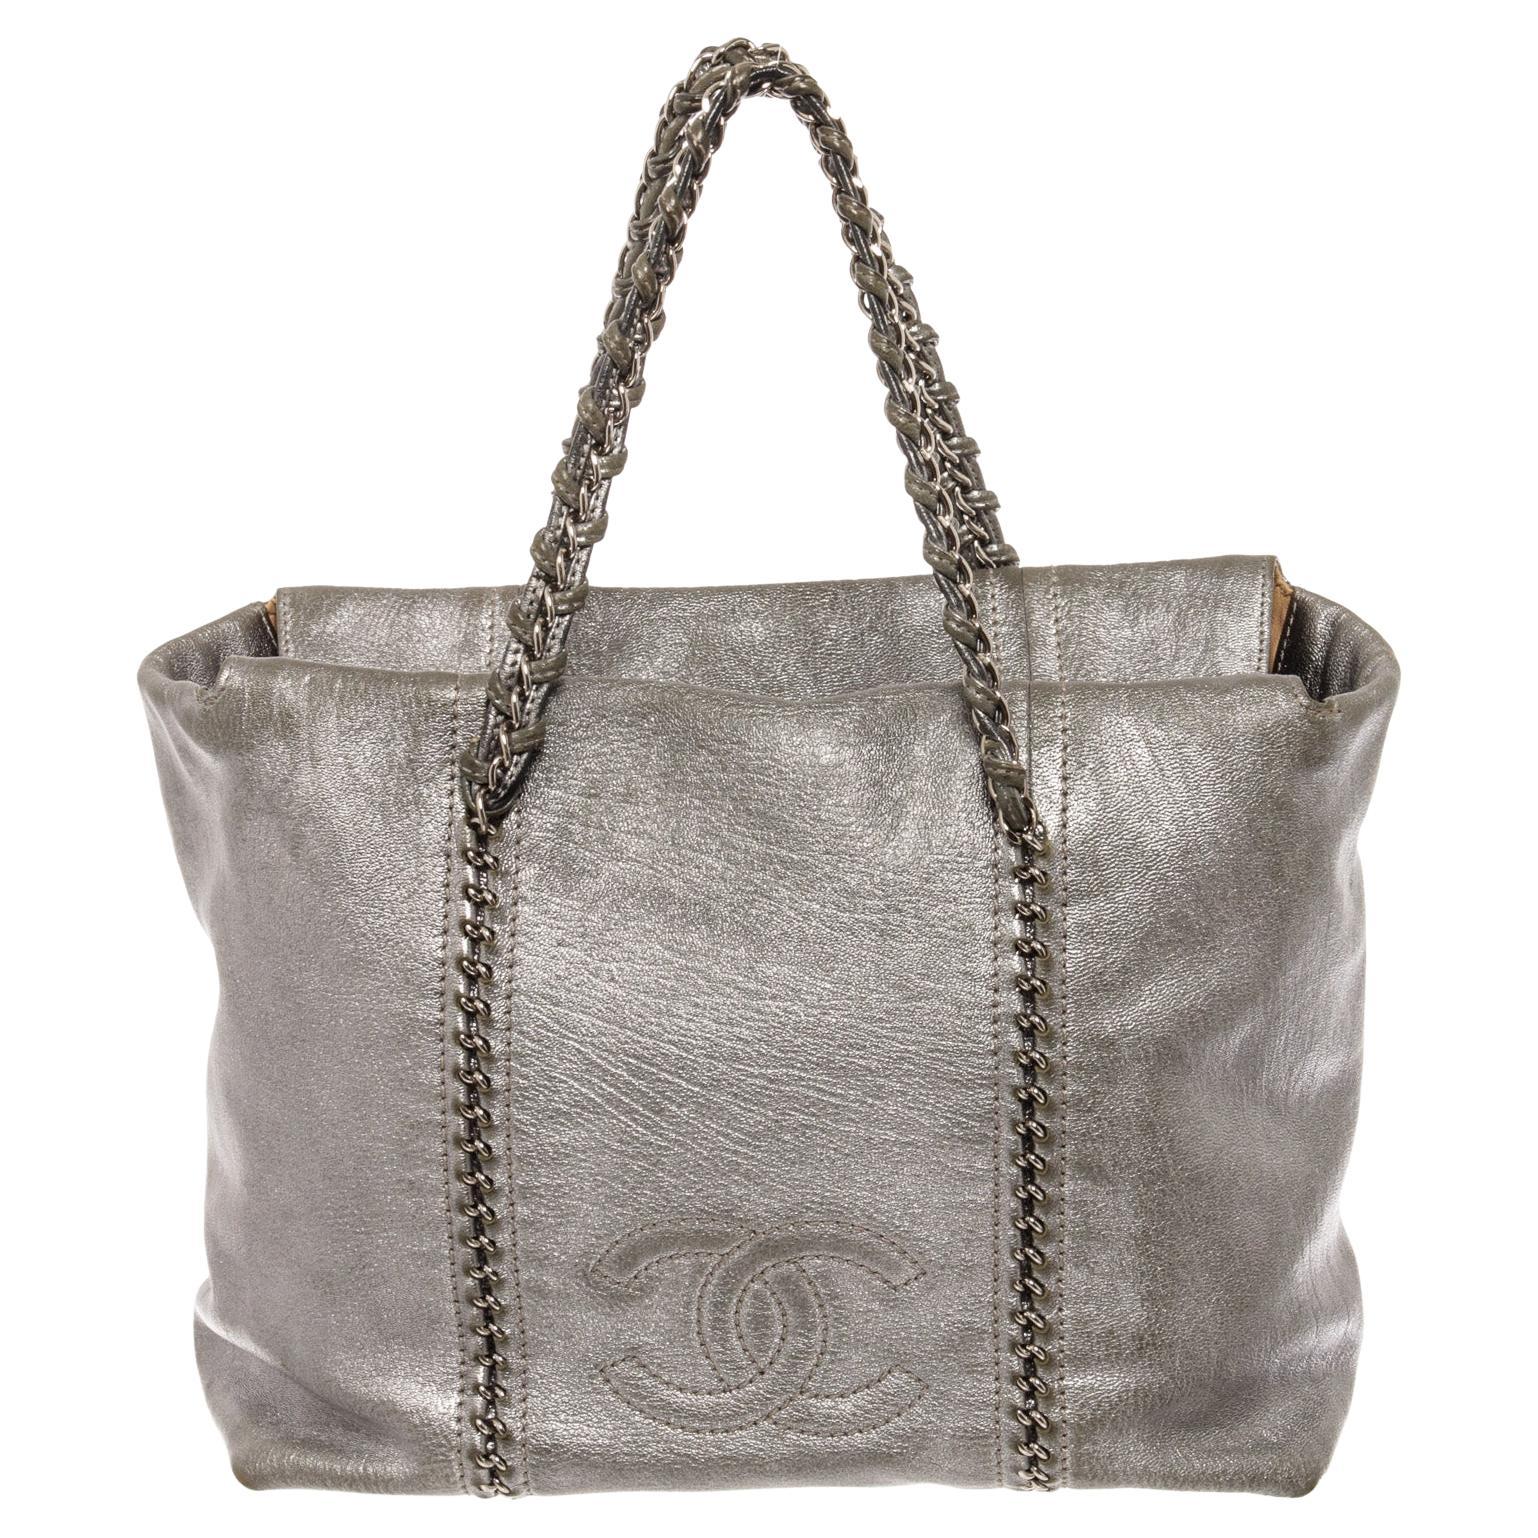 Chanel Metallic Silver CC Chain Tote Bag